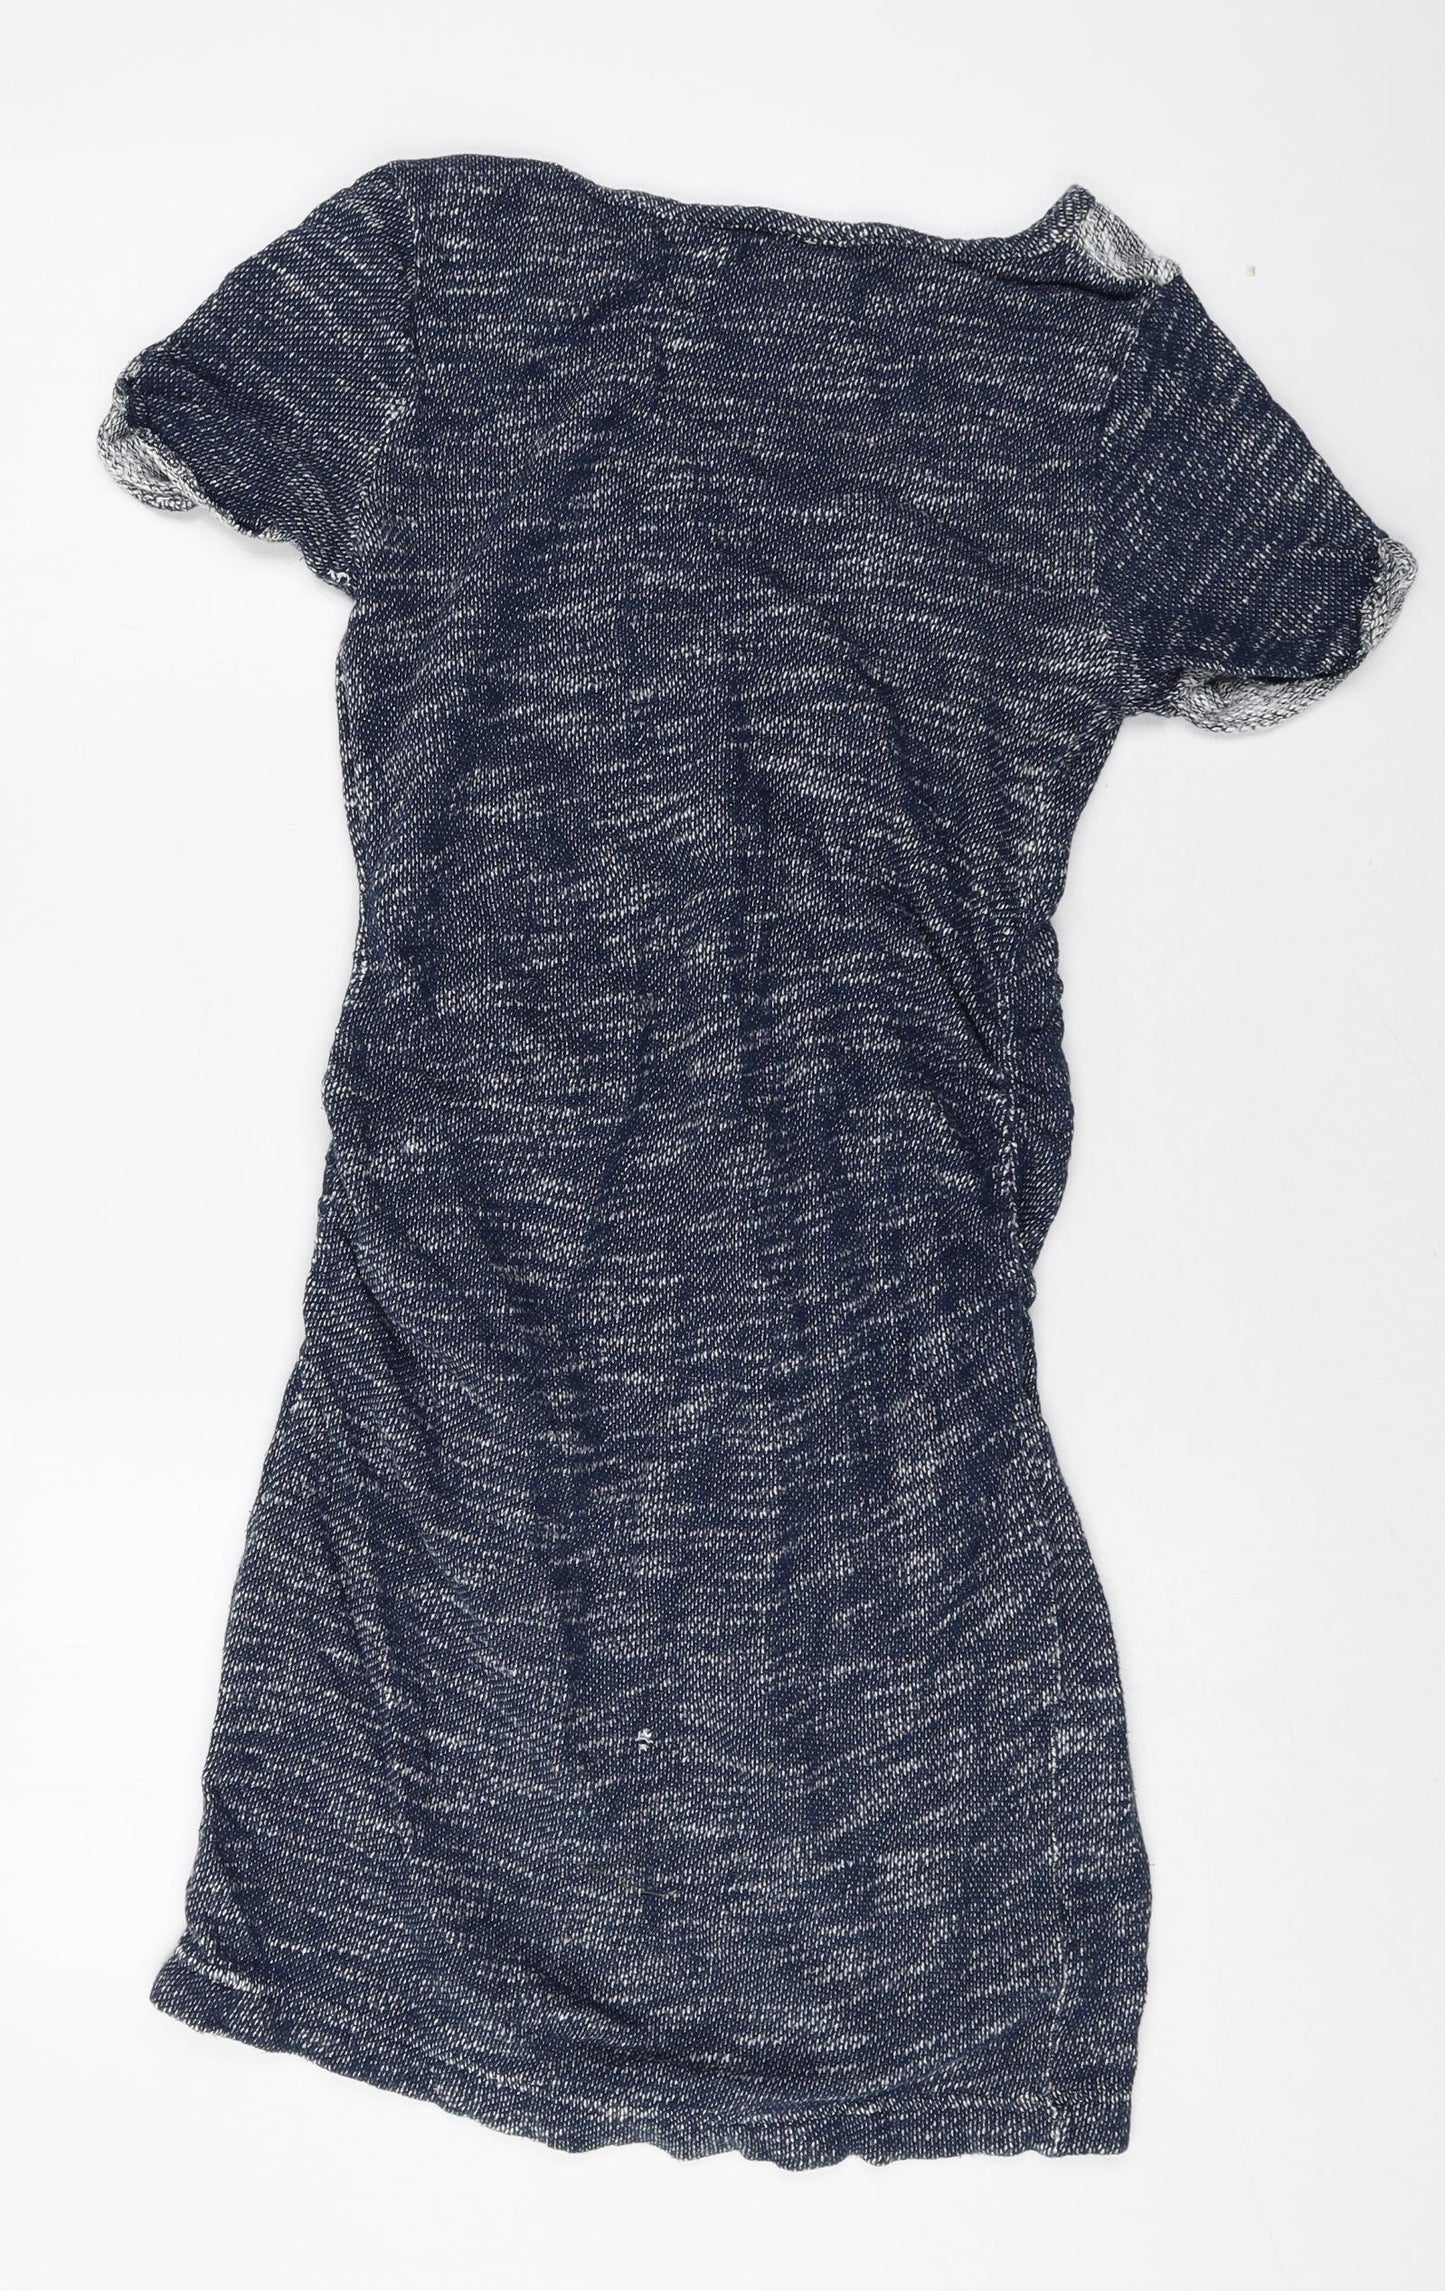 Liz Lange Womens Blue 100% Cotton T-Shirt Dress Size S Round Neck Pullover